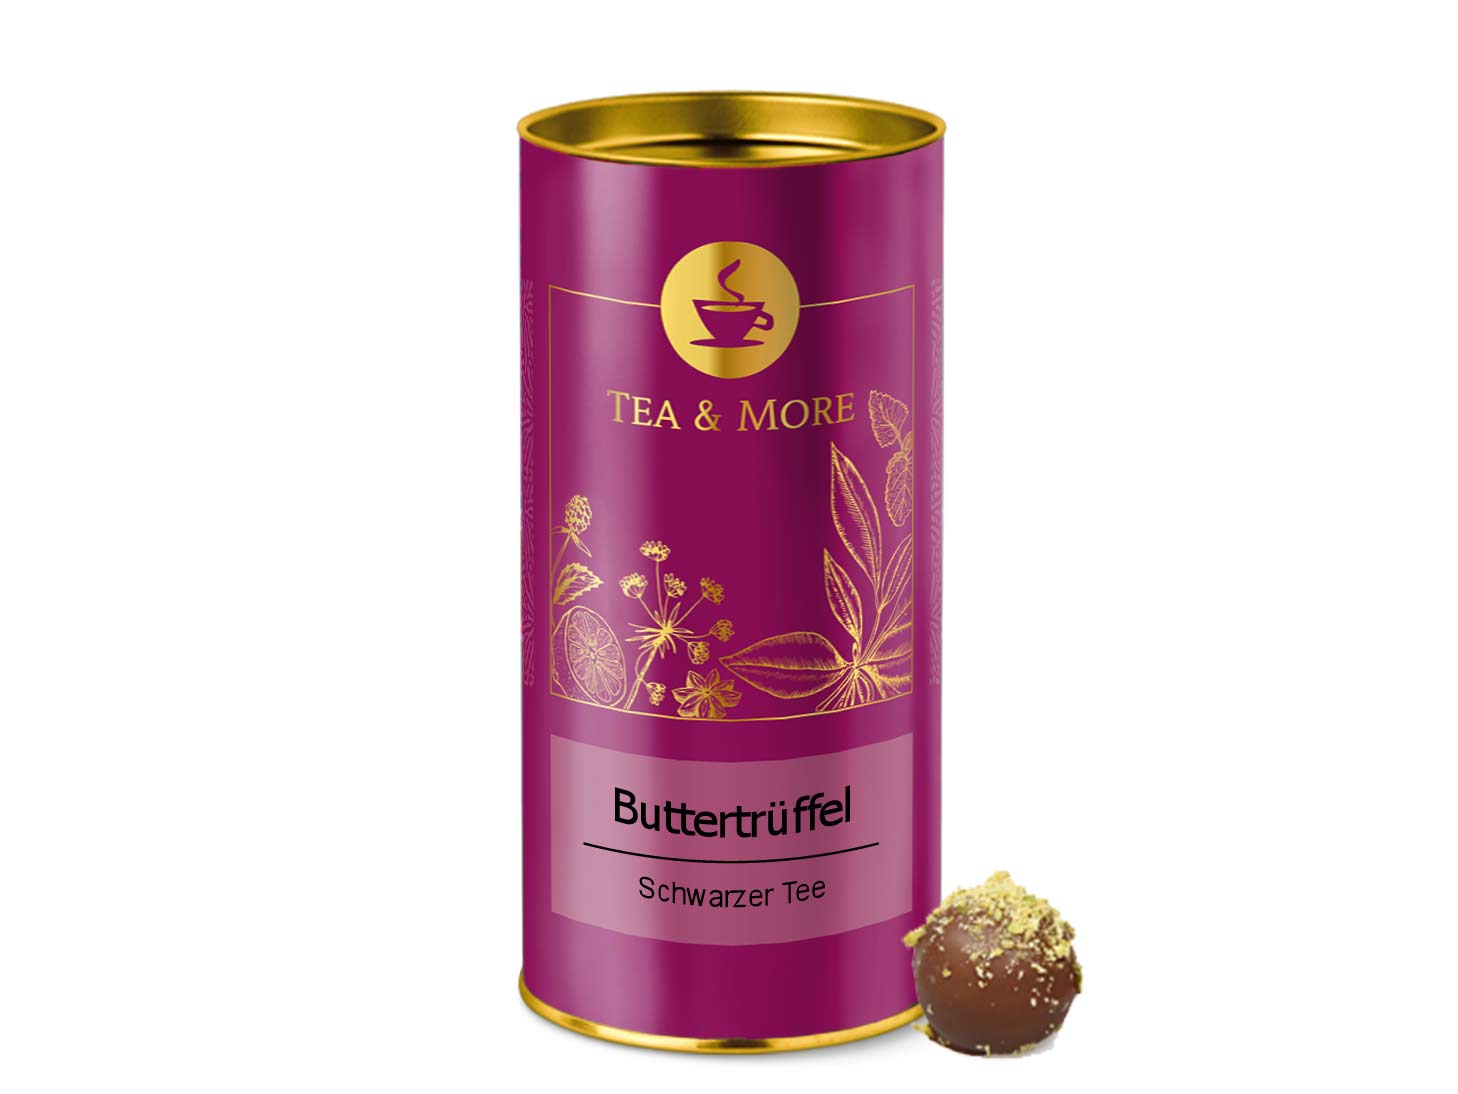 Butter truffle